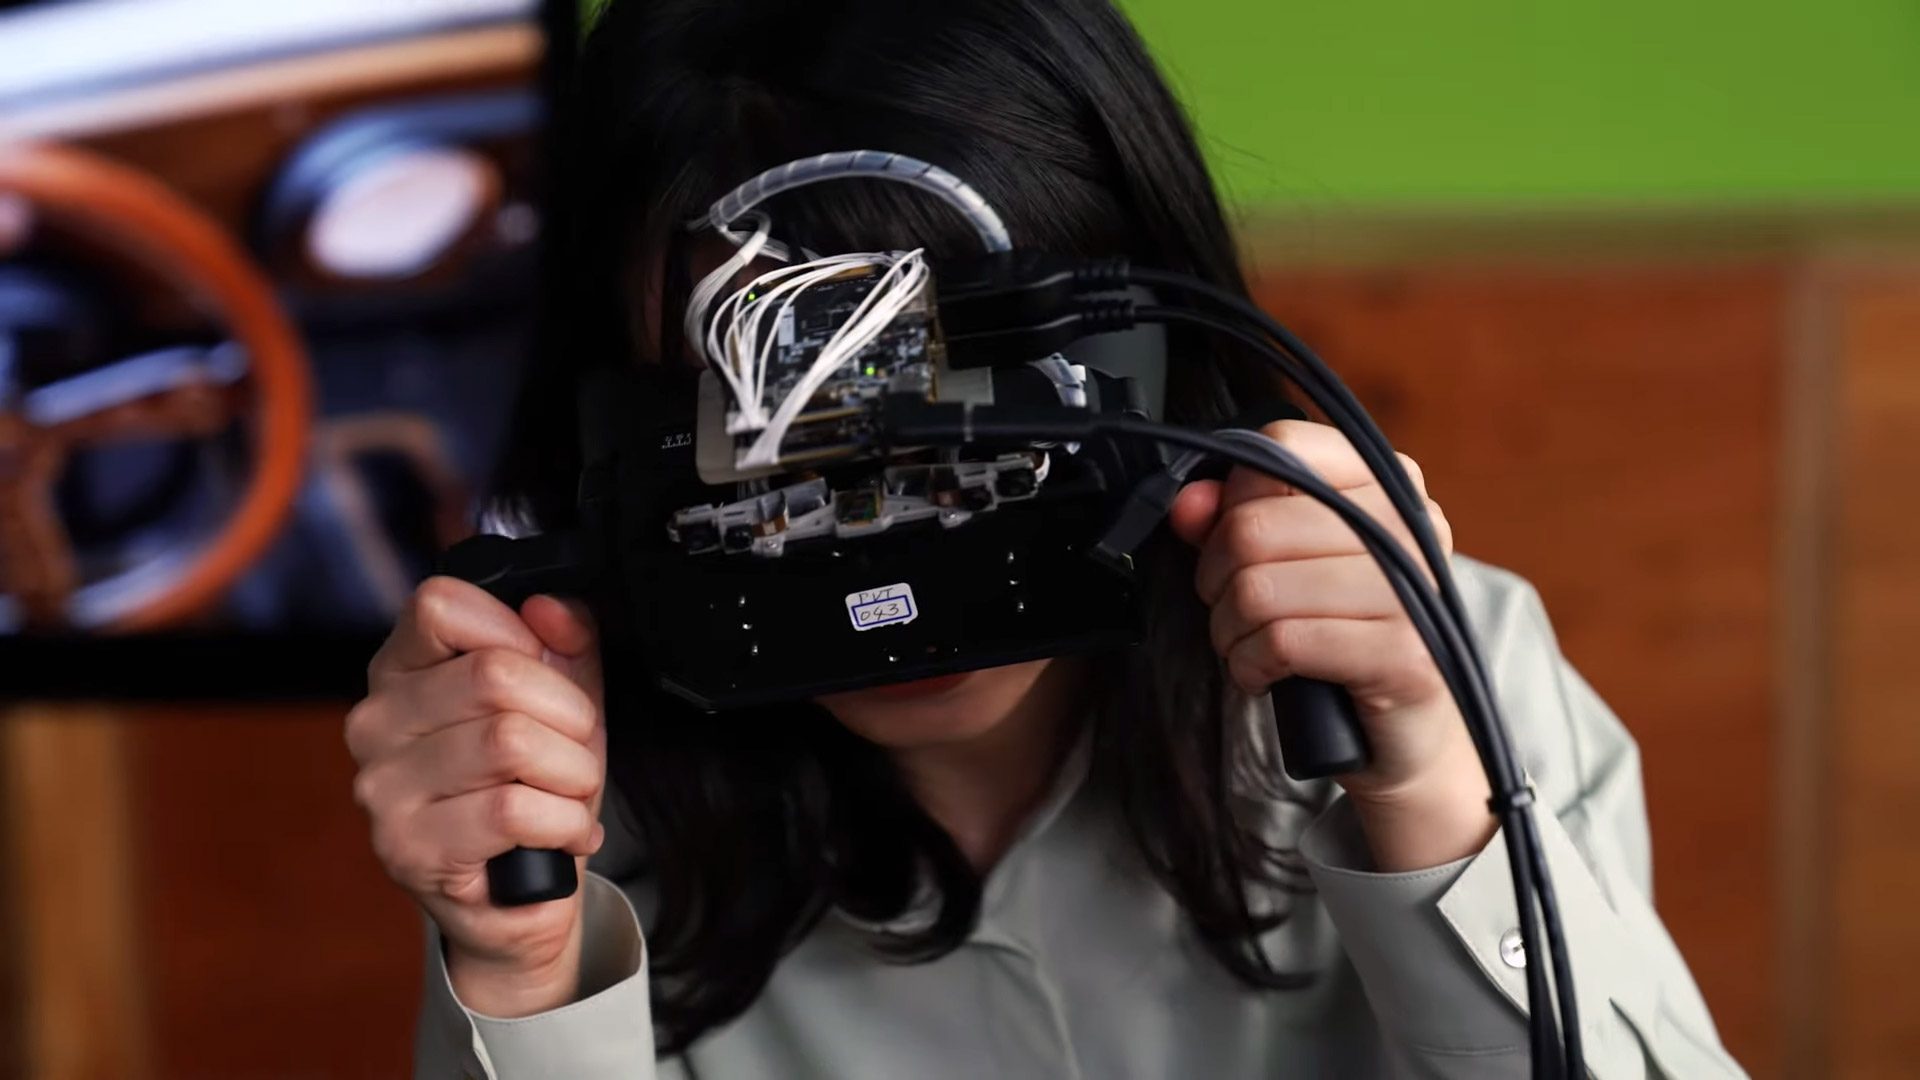 Vr драйвера. Прототипы VR шлемов. Виртуальный стрелок Sony VR. VR Drivers. Smart Helmet Prototype.